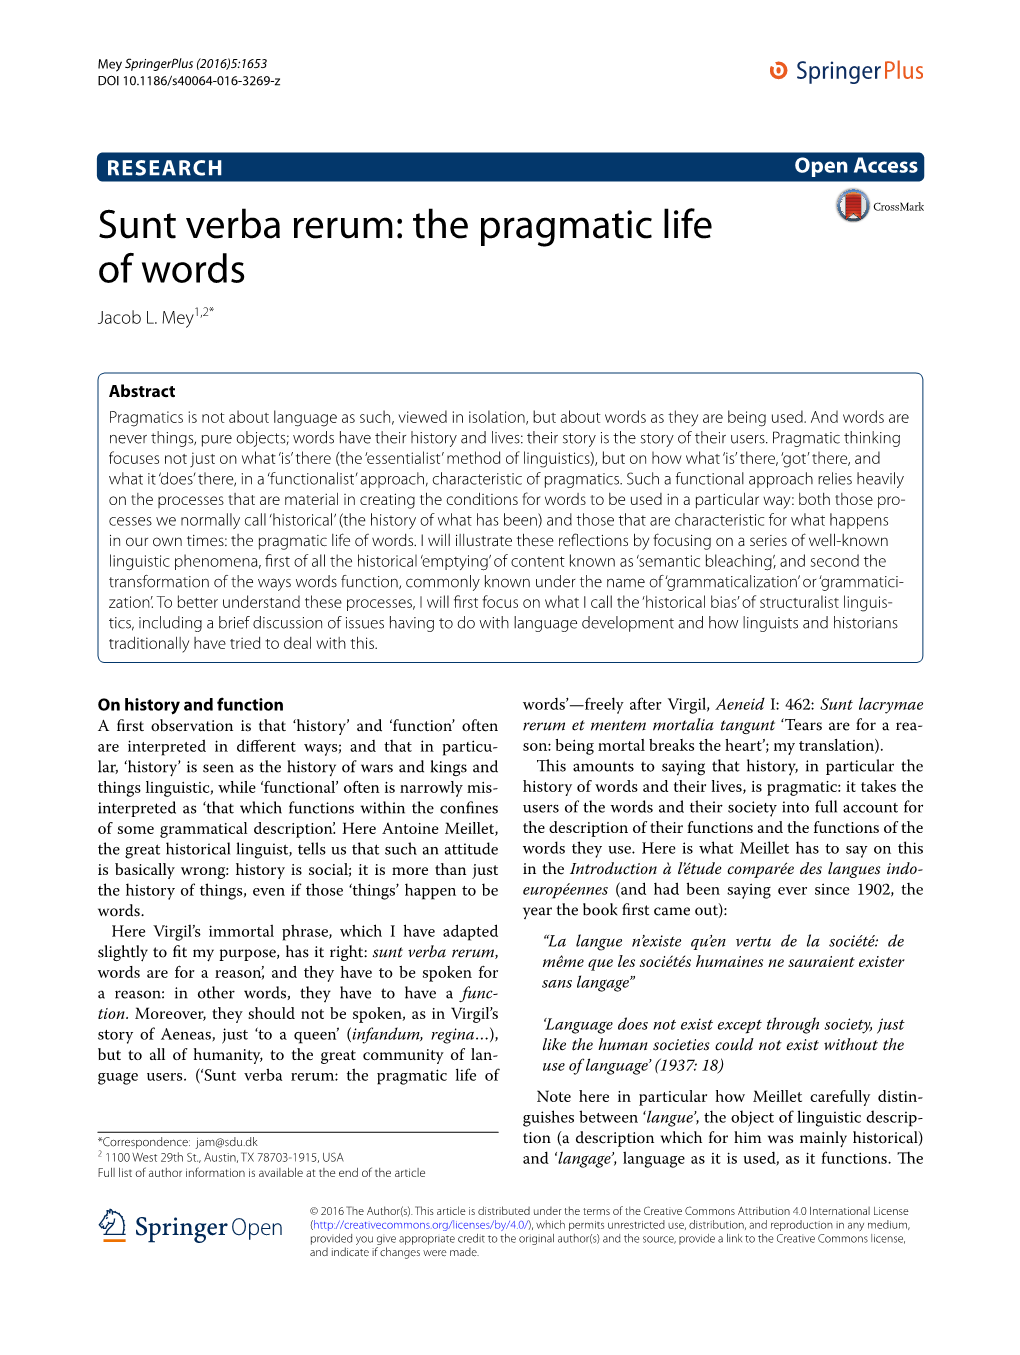 Sunt Verba Rerum: the Pragmatic Life of Words Jacob L